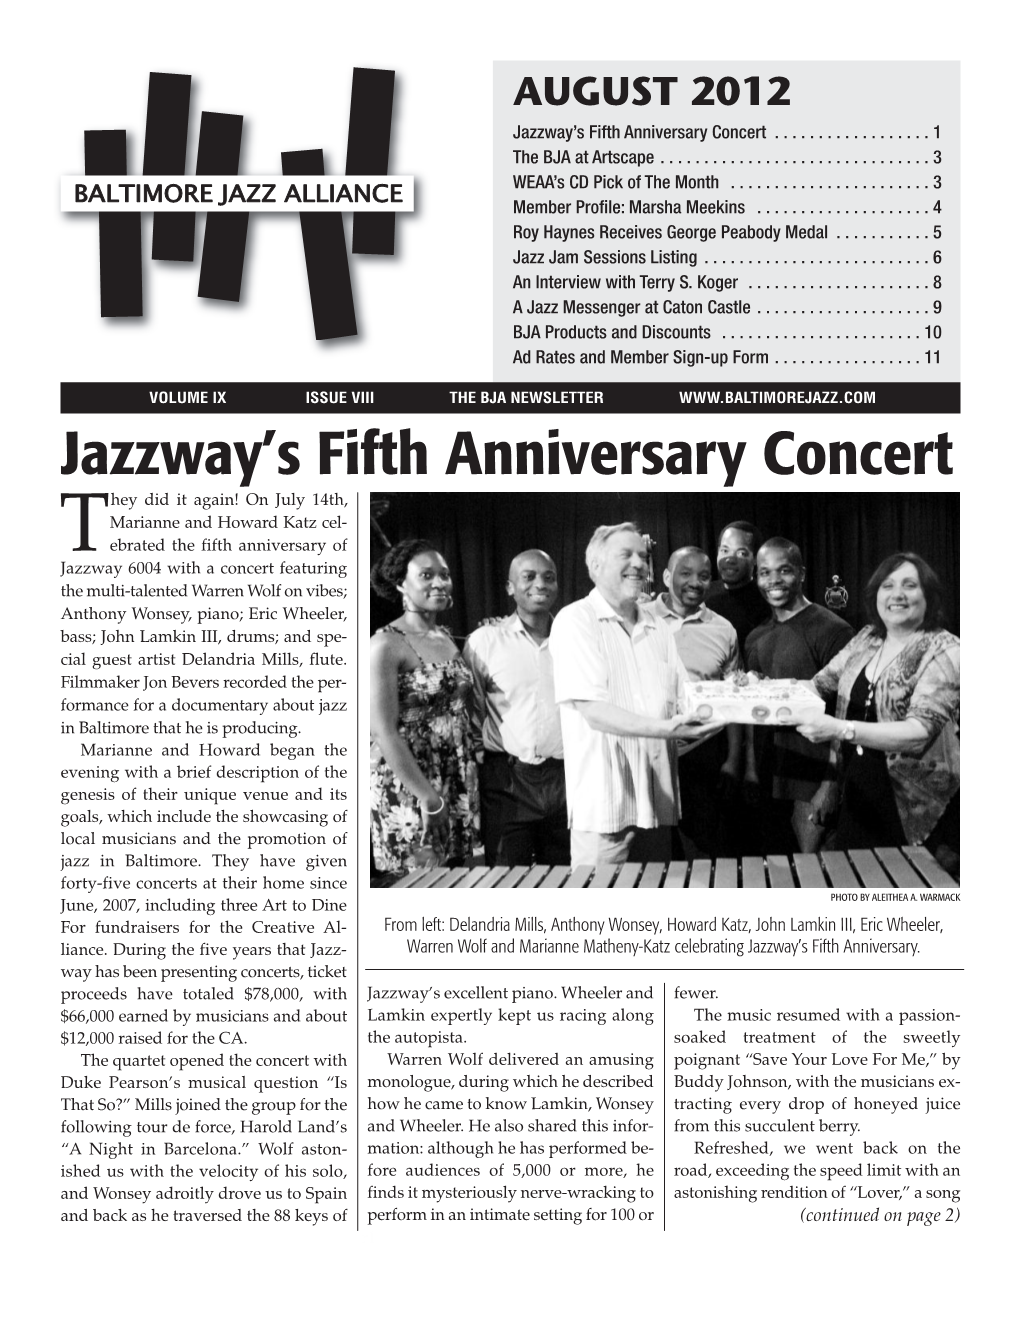 Jazzway's Fifth Anniversary Concert